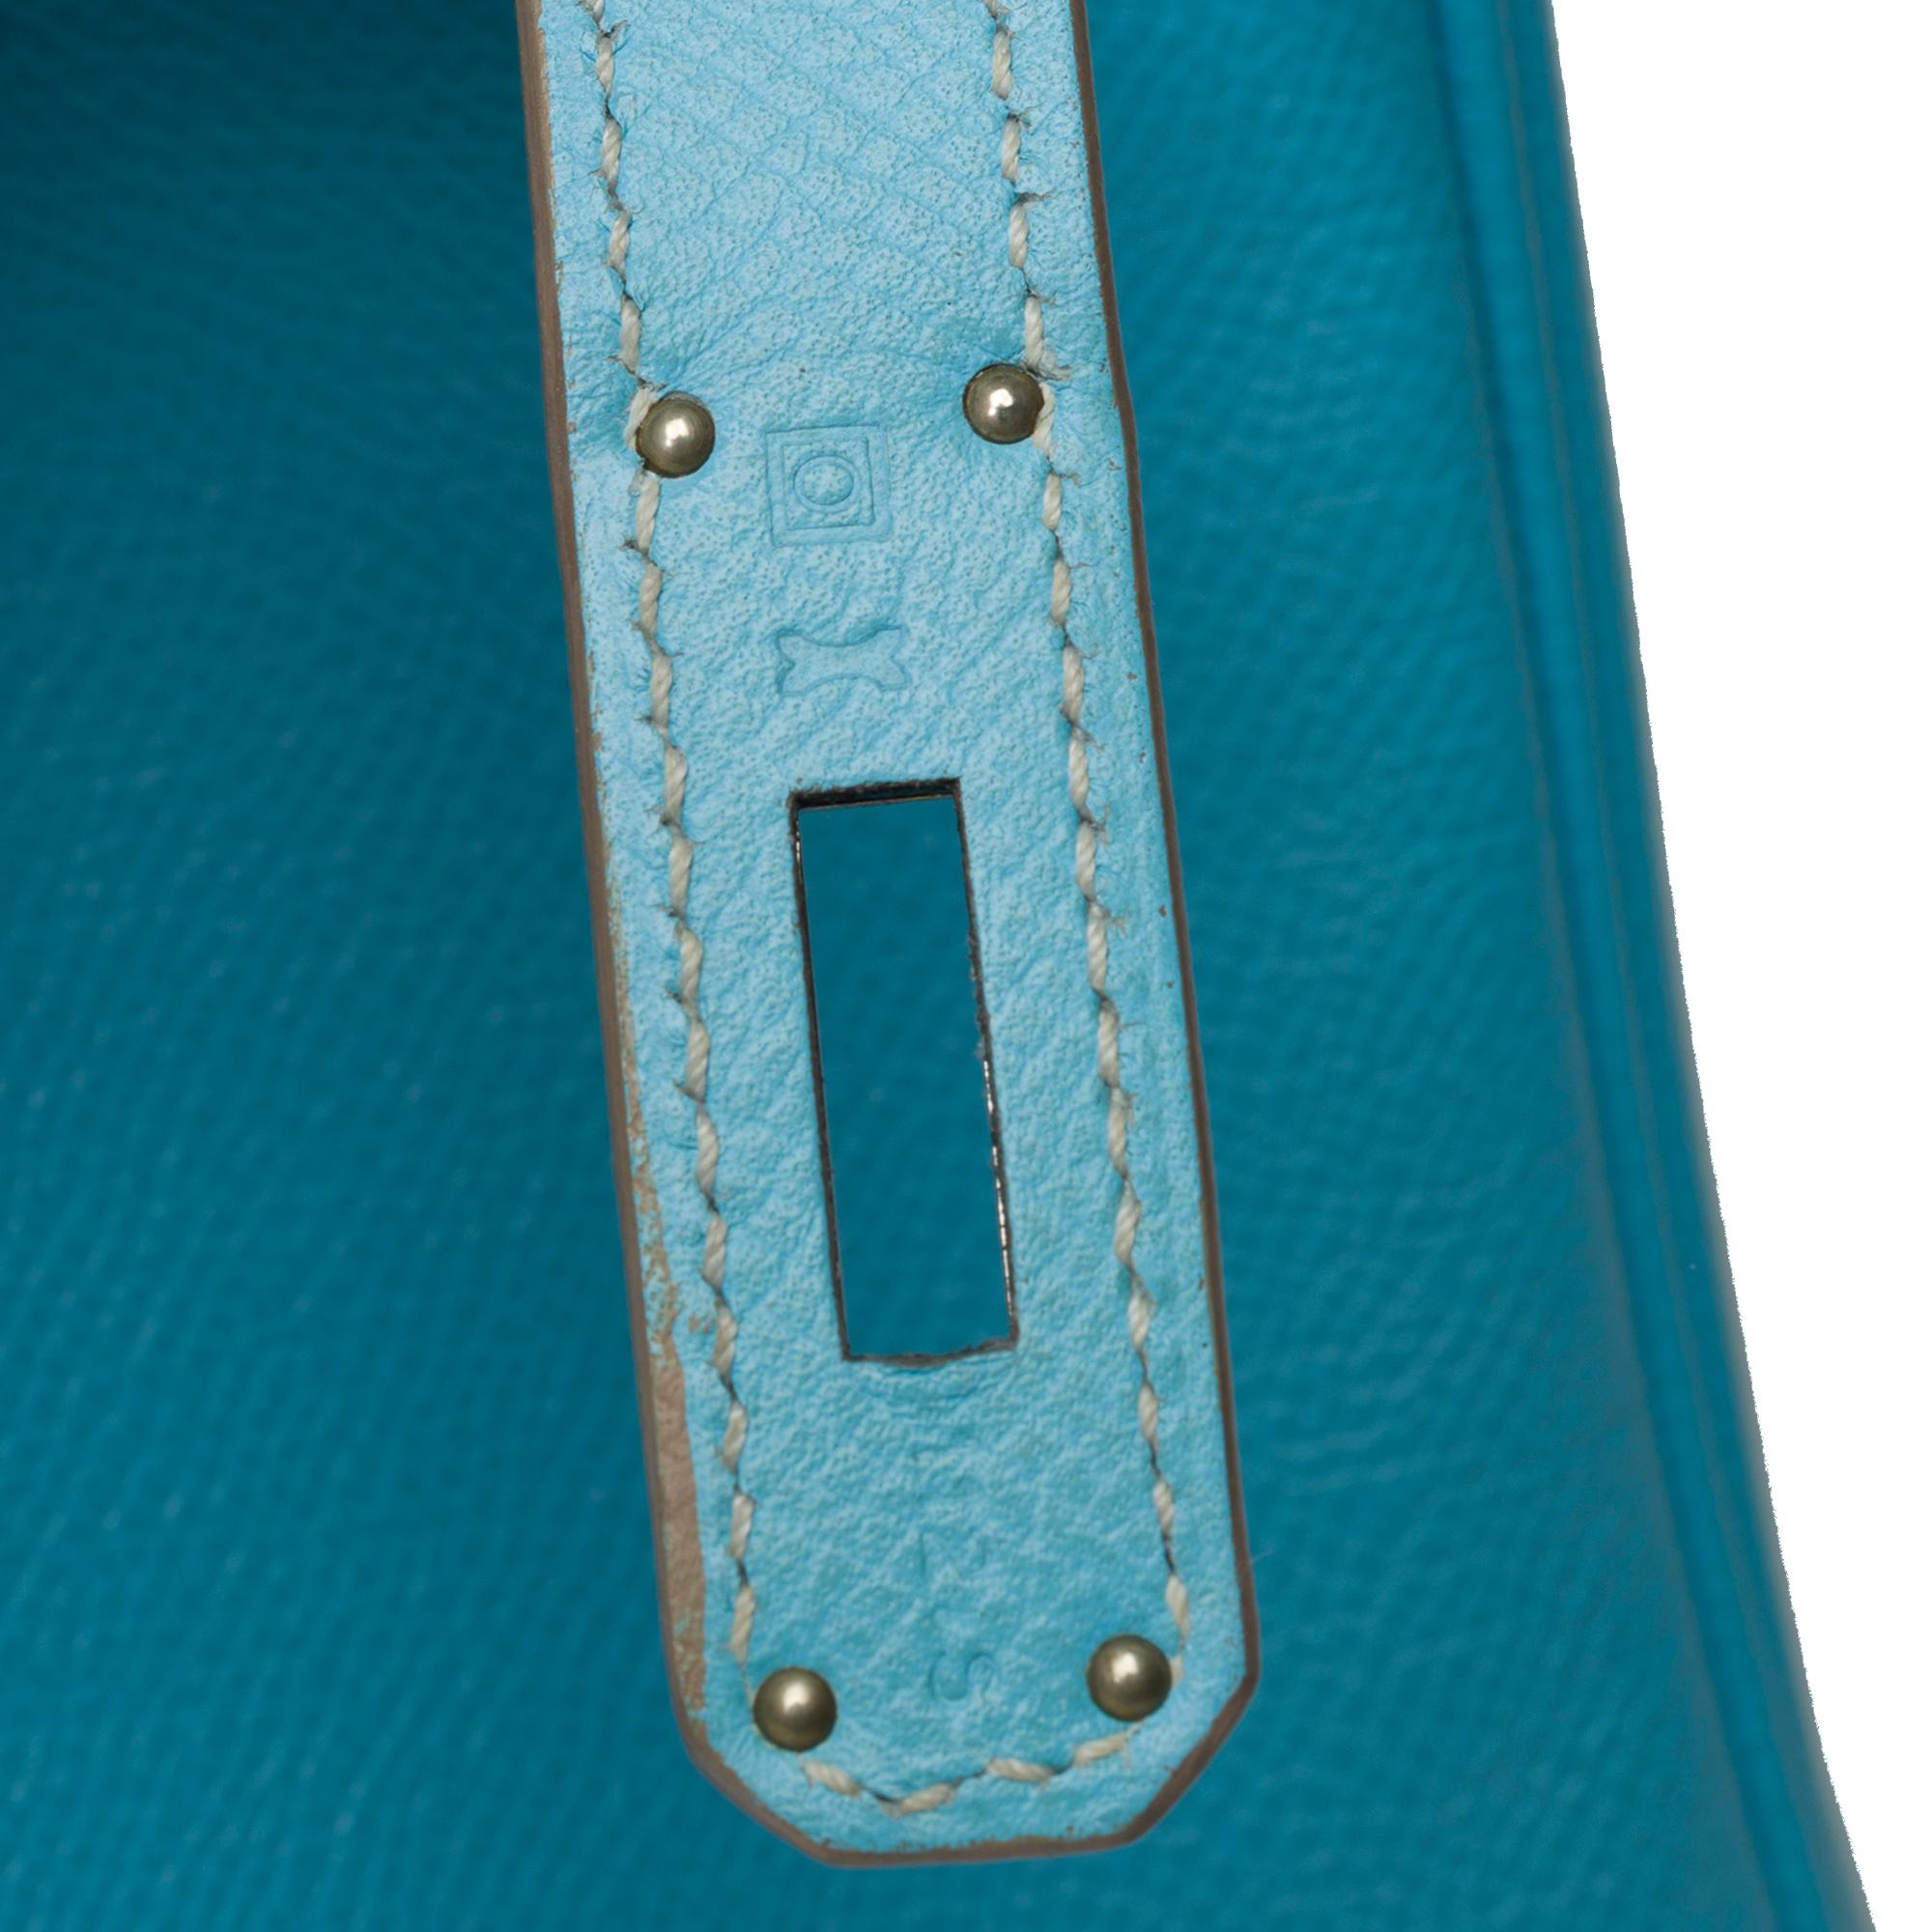 Rare Hermes Birkin 30 Candy Edition handbag in Celeste Blue Epsom leather, SHW 5